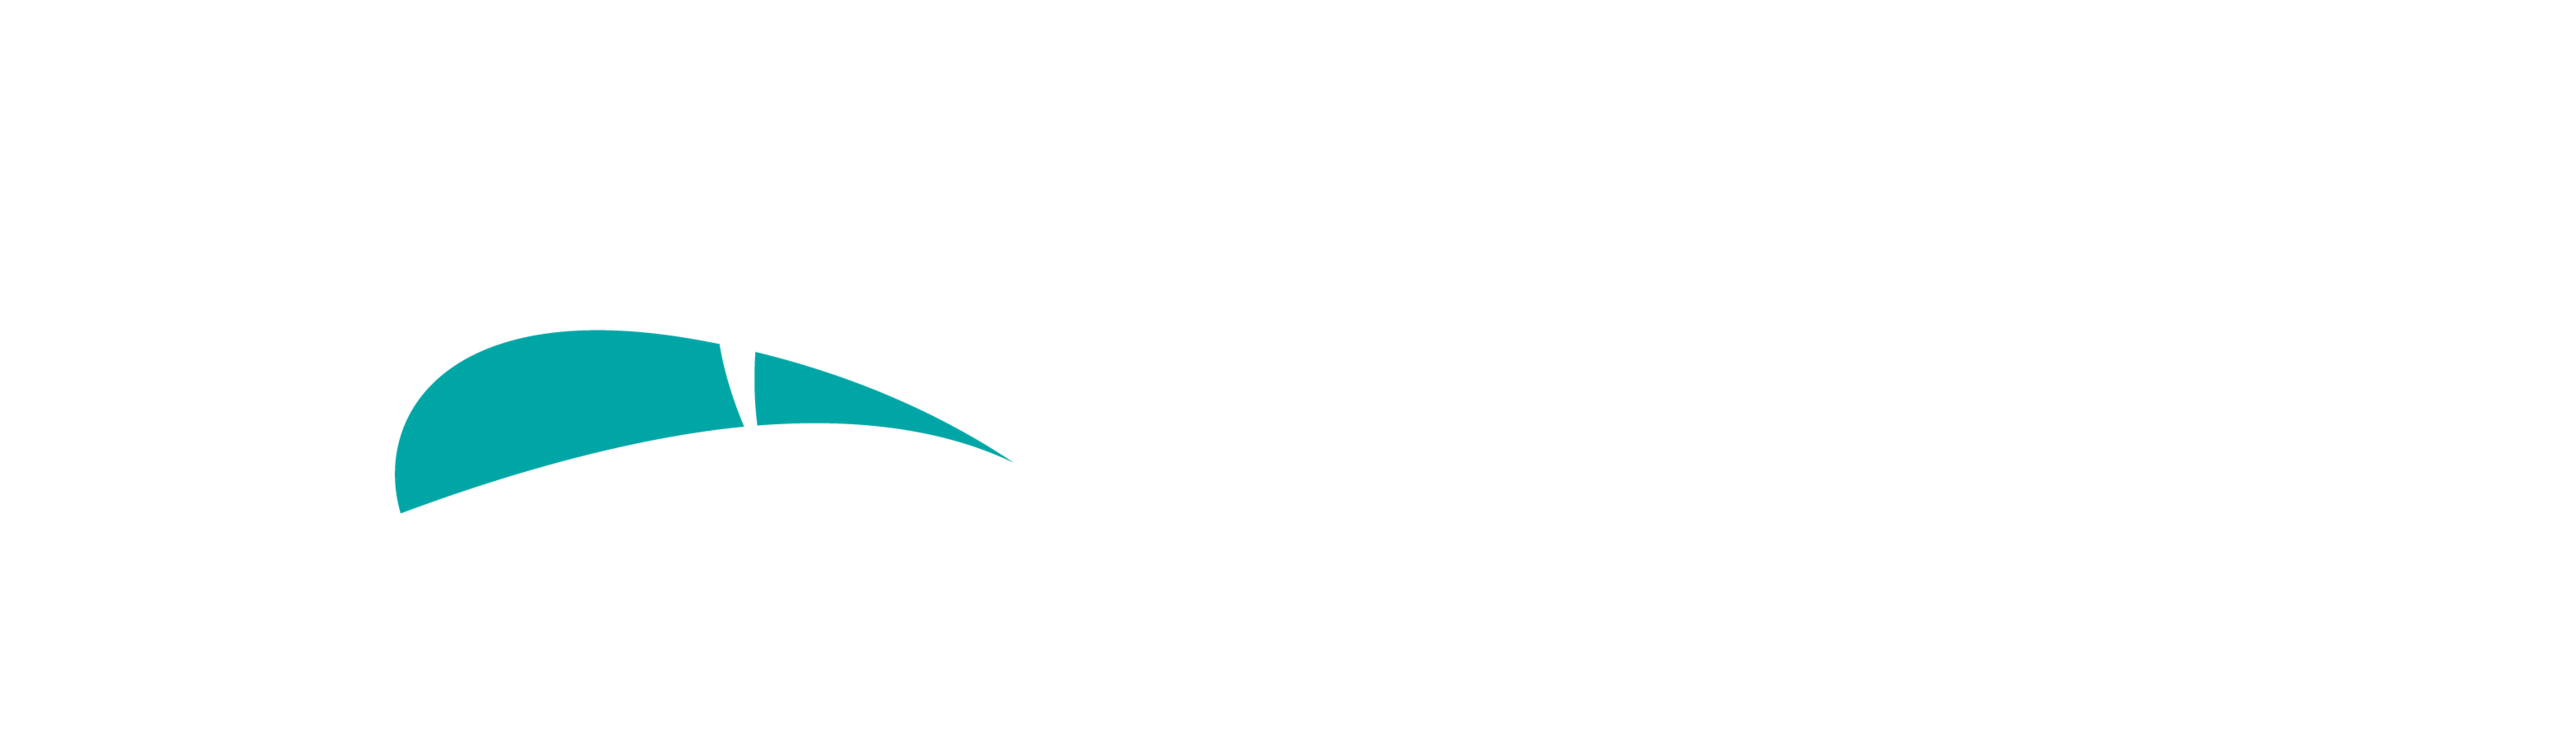 Pega logo (reverse)